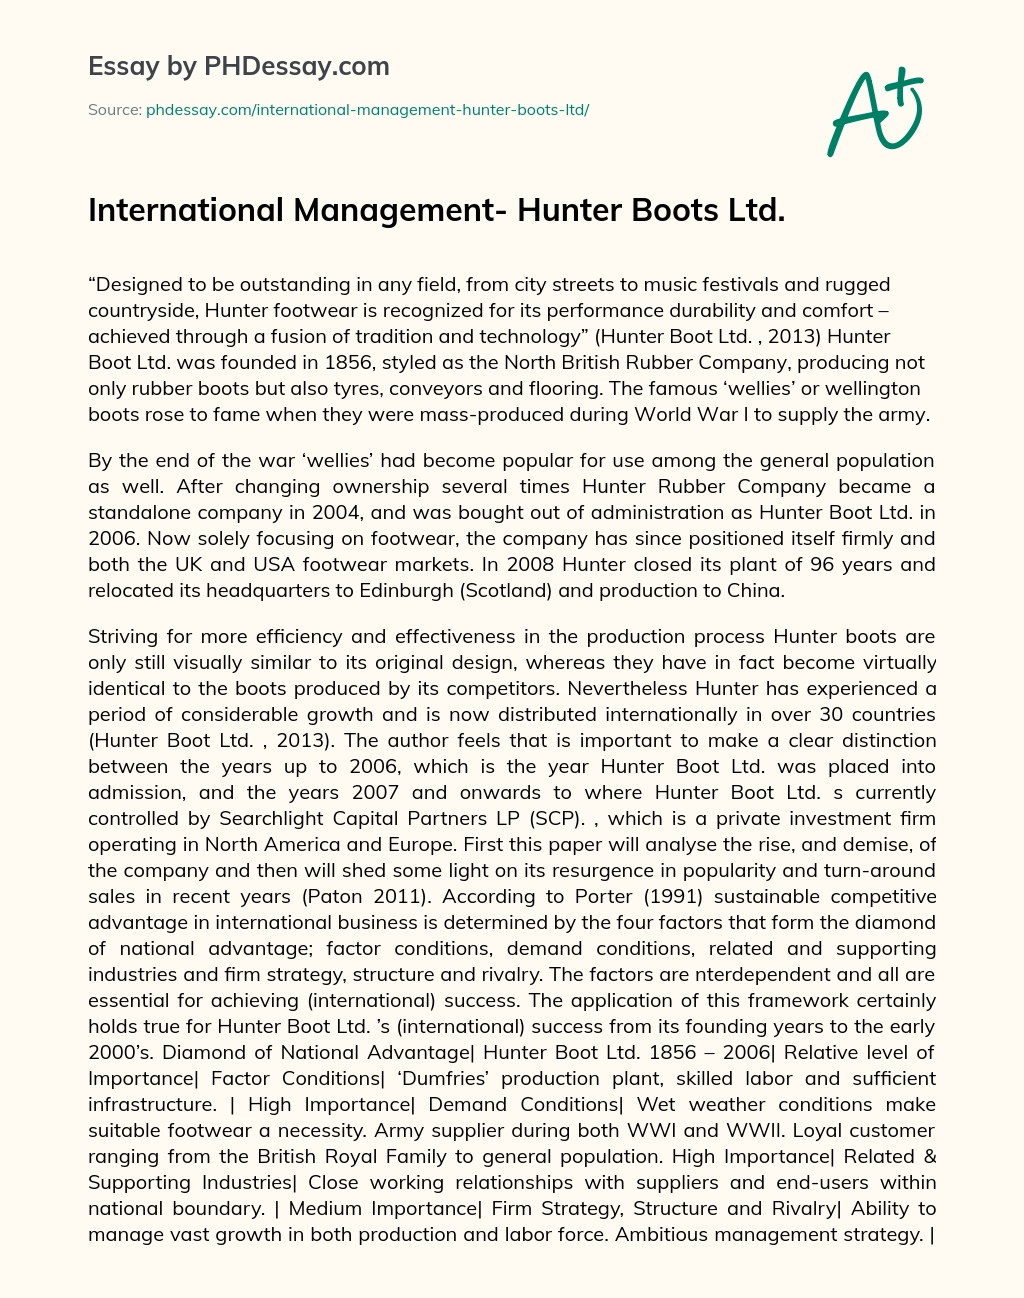 International Management- Hunter Boots Ltd. essay